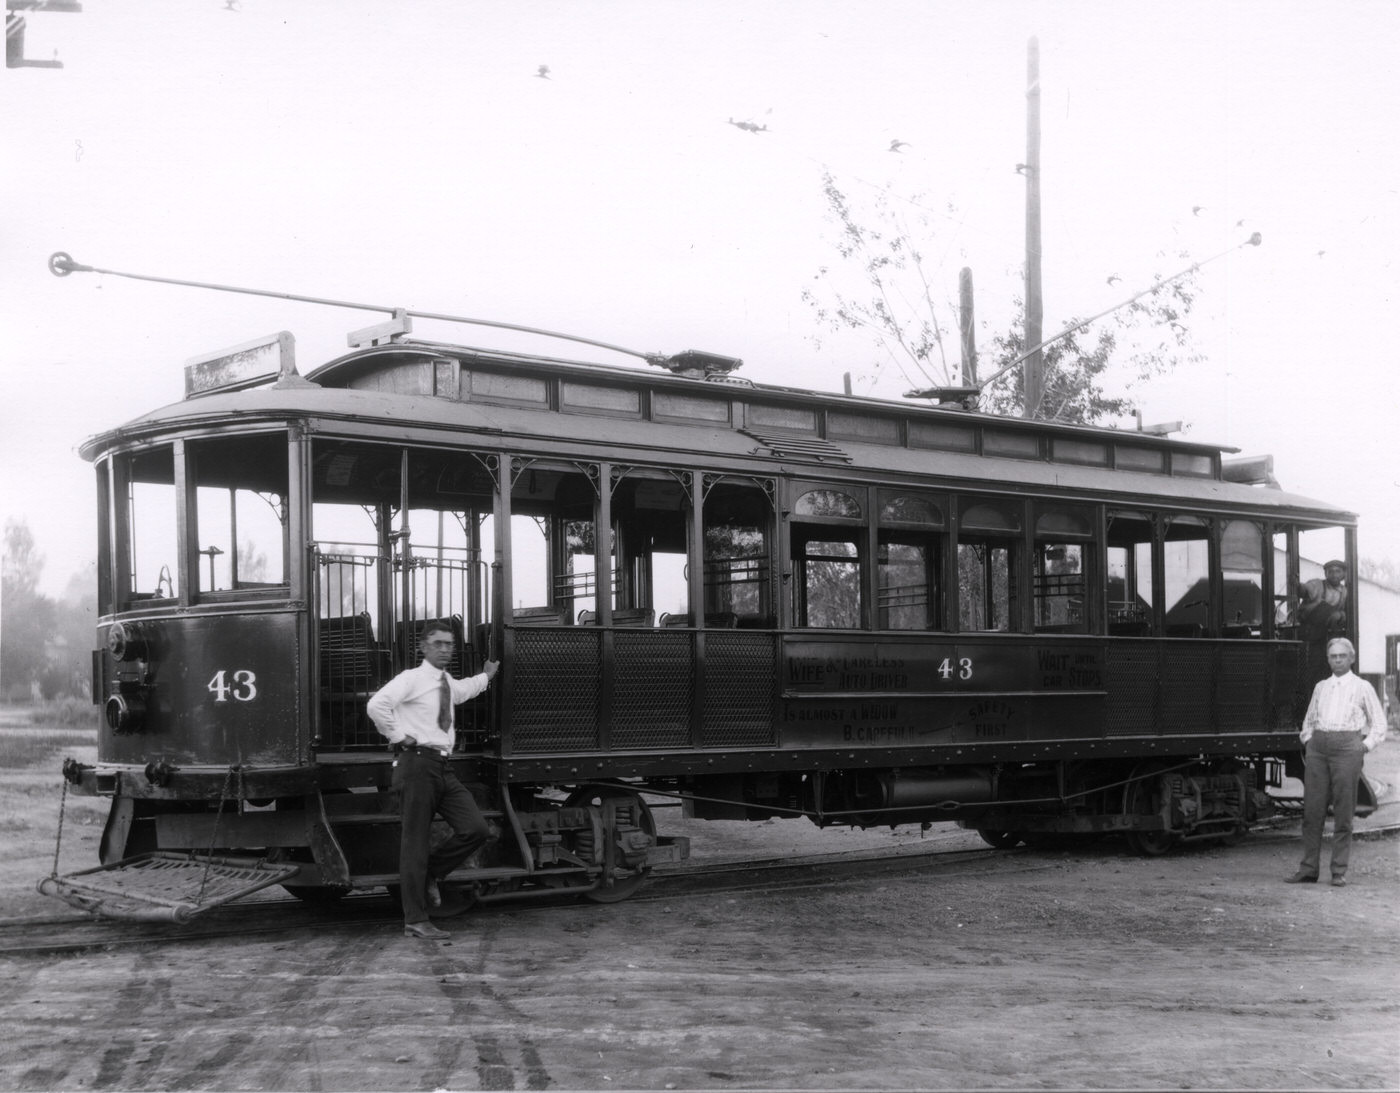 Streetcar No. 43 in Phoenix, 1920